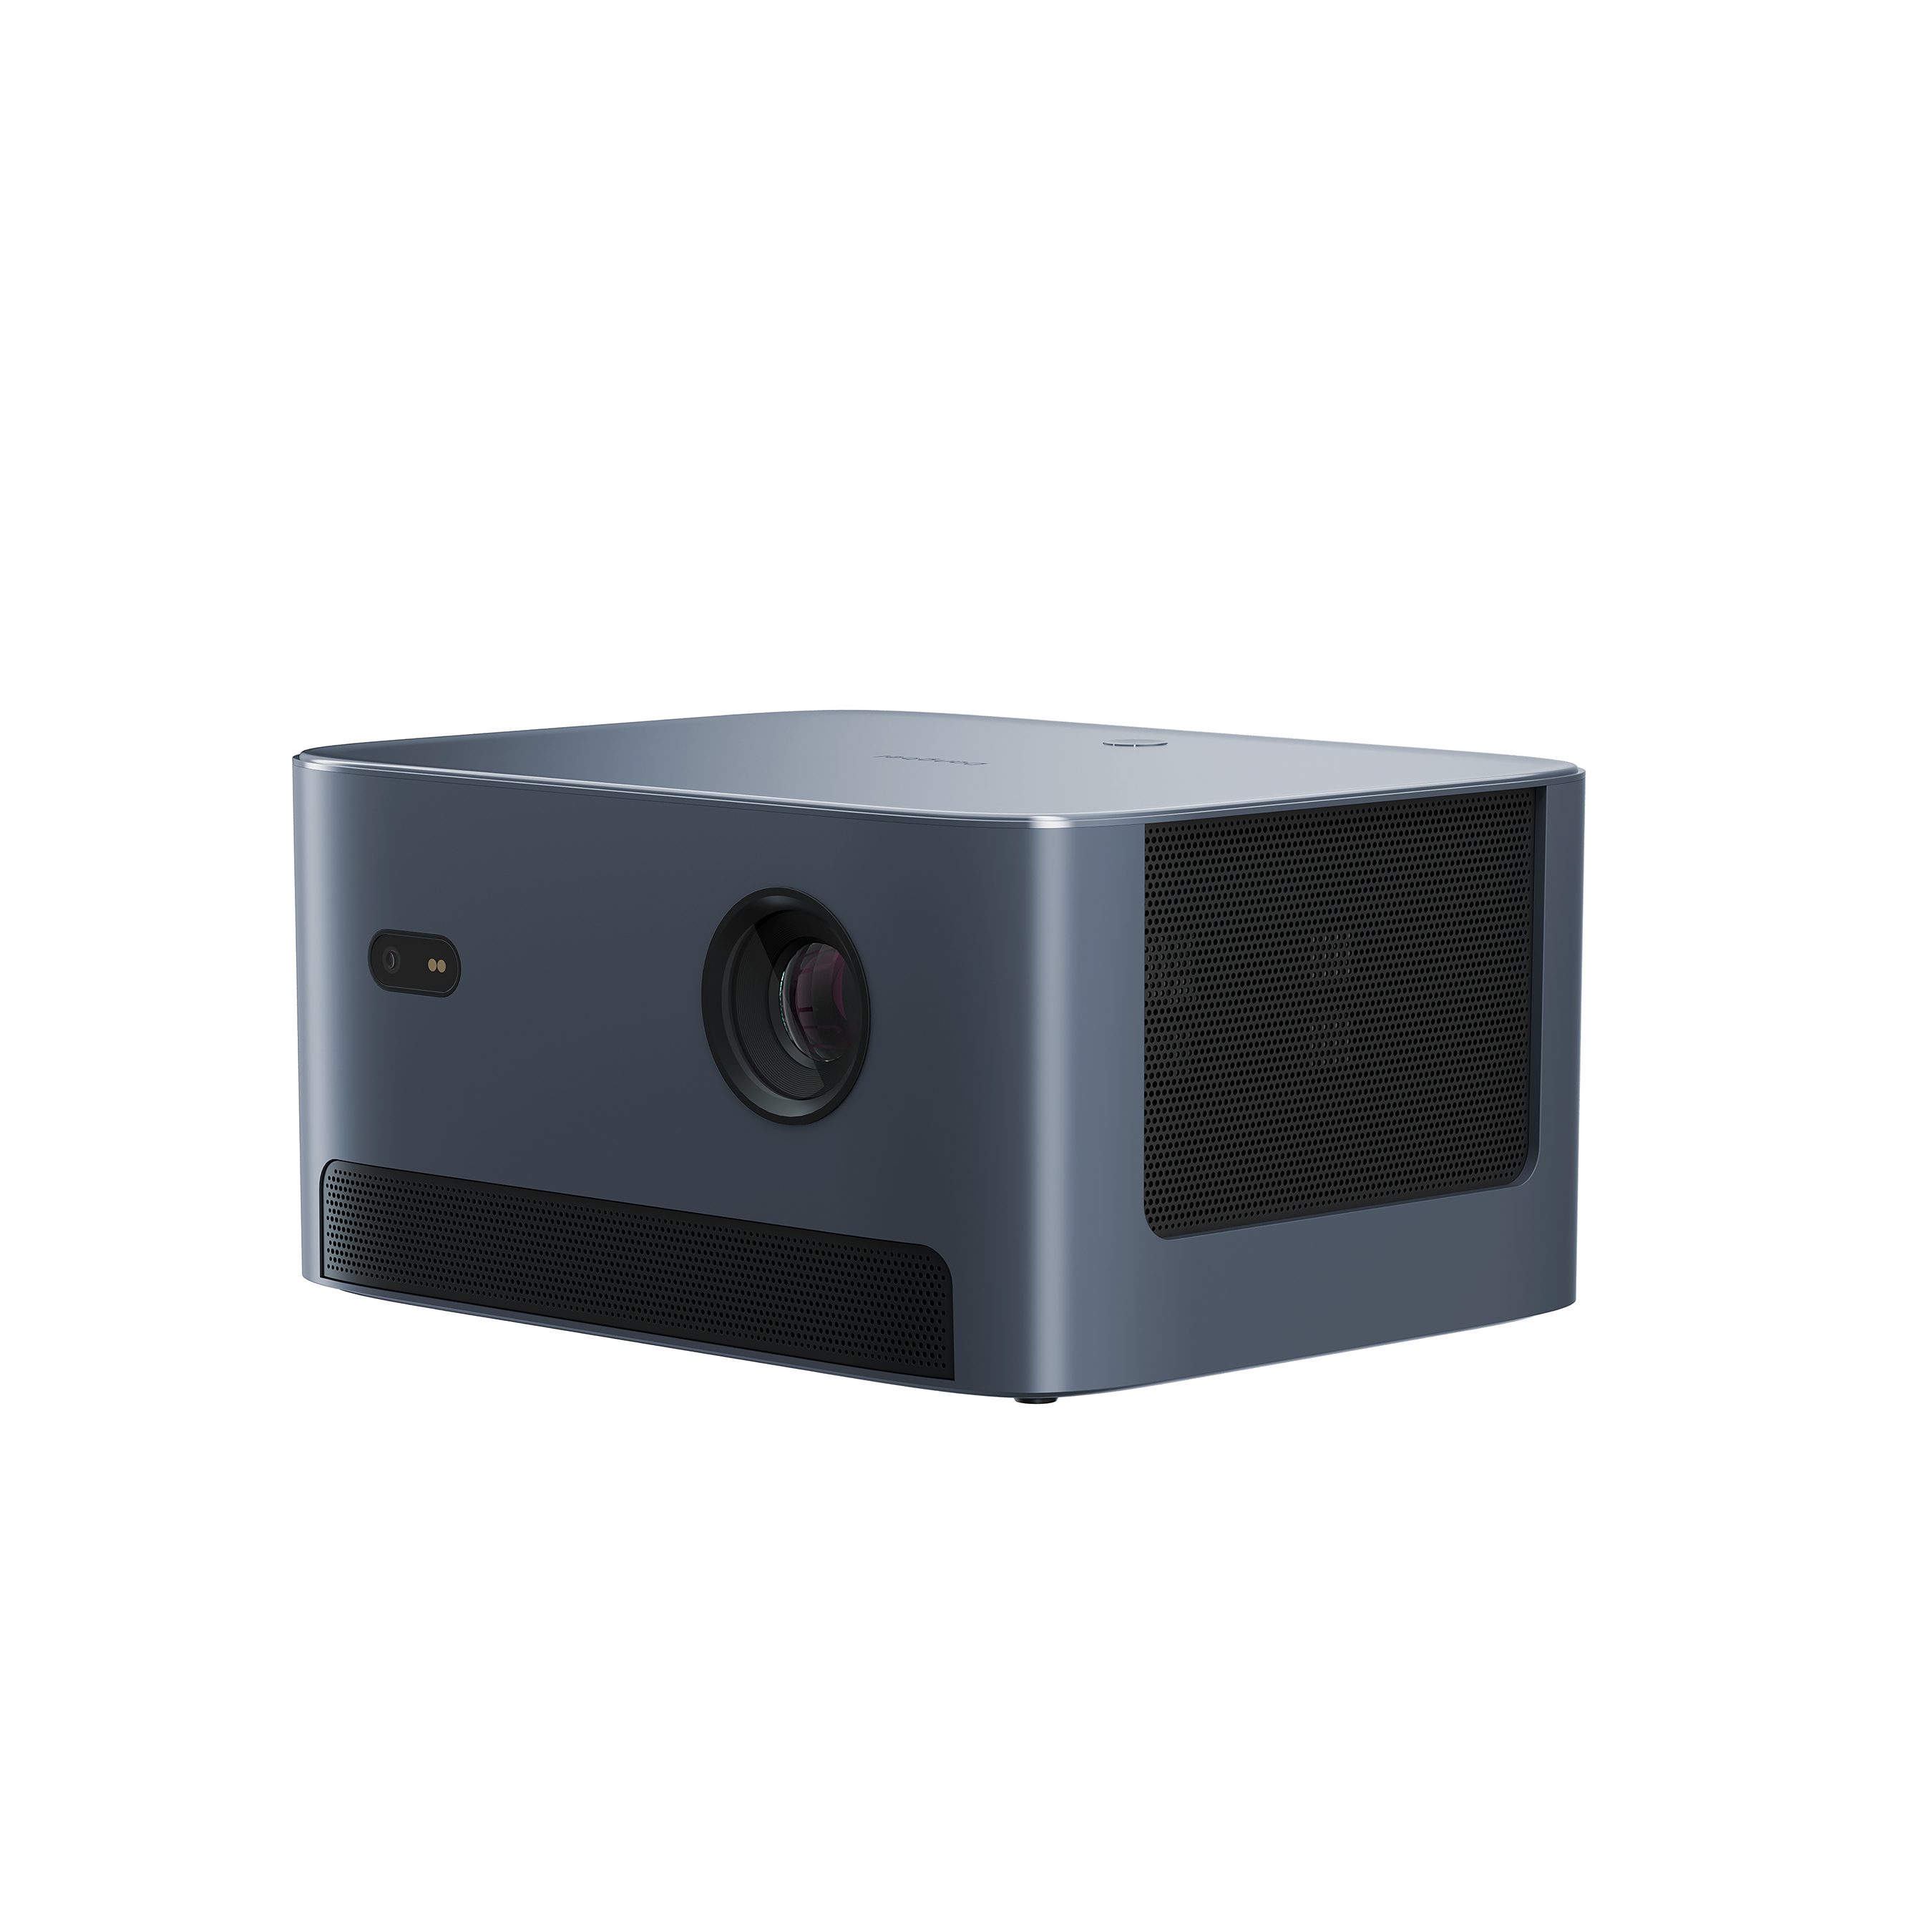 DANGBEI Beamer(Full-HD, 540 Netflix Blau ANSI-Lumen) Neo 1080P